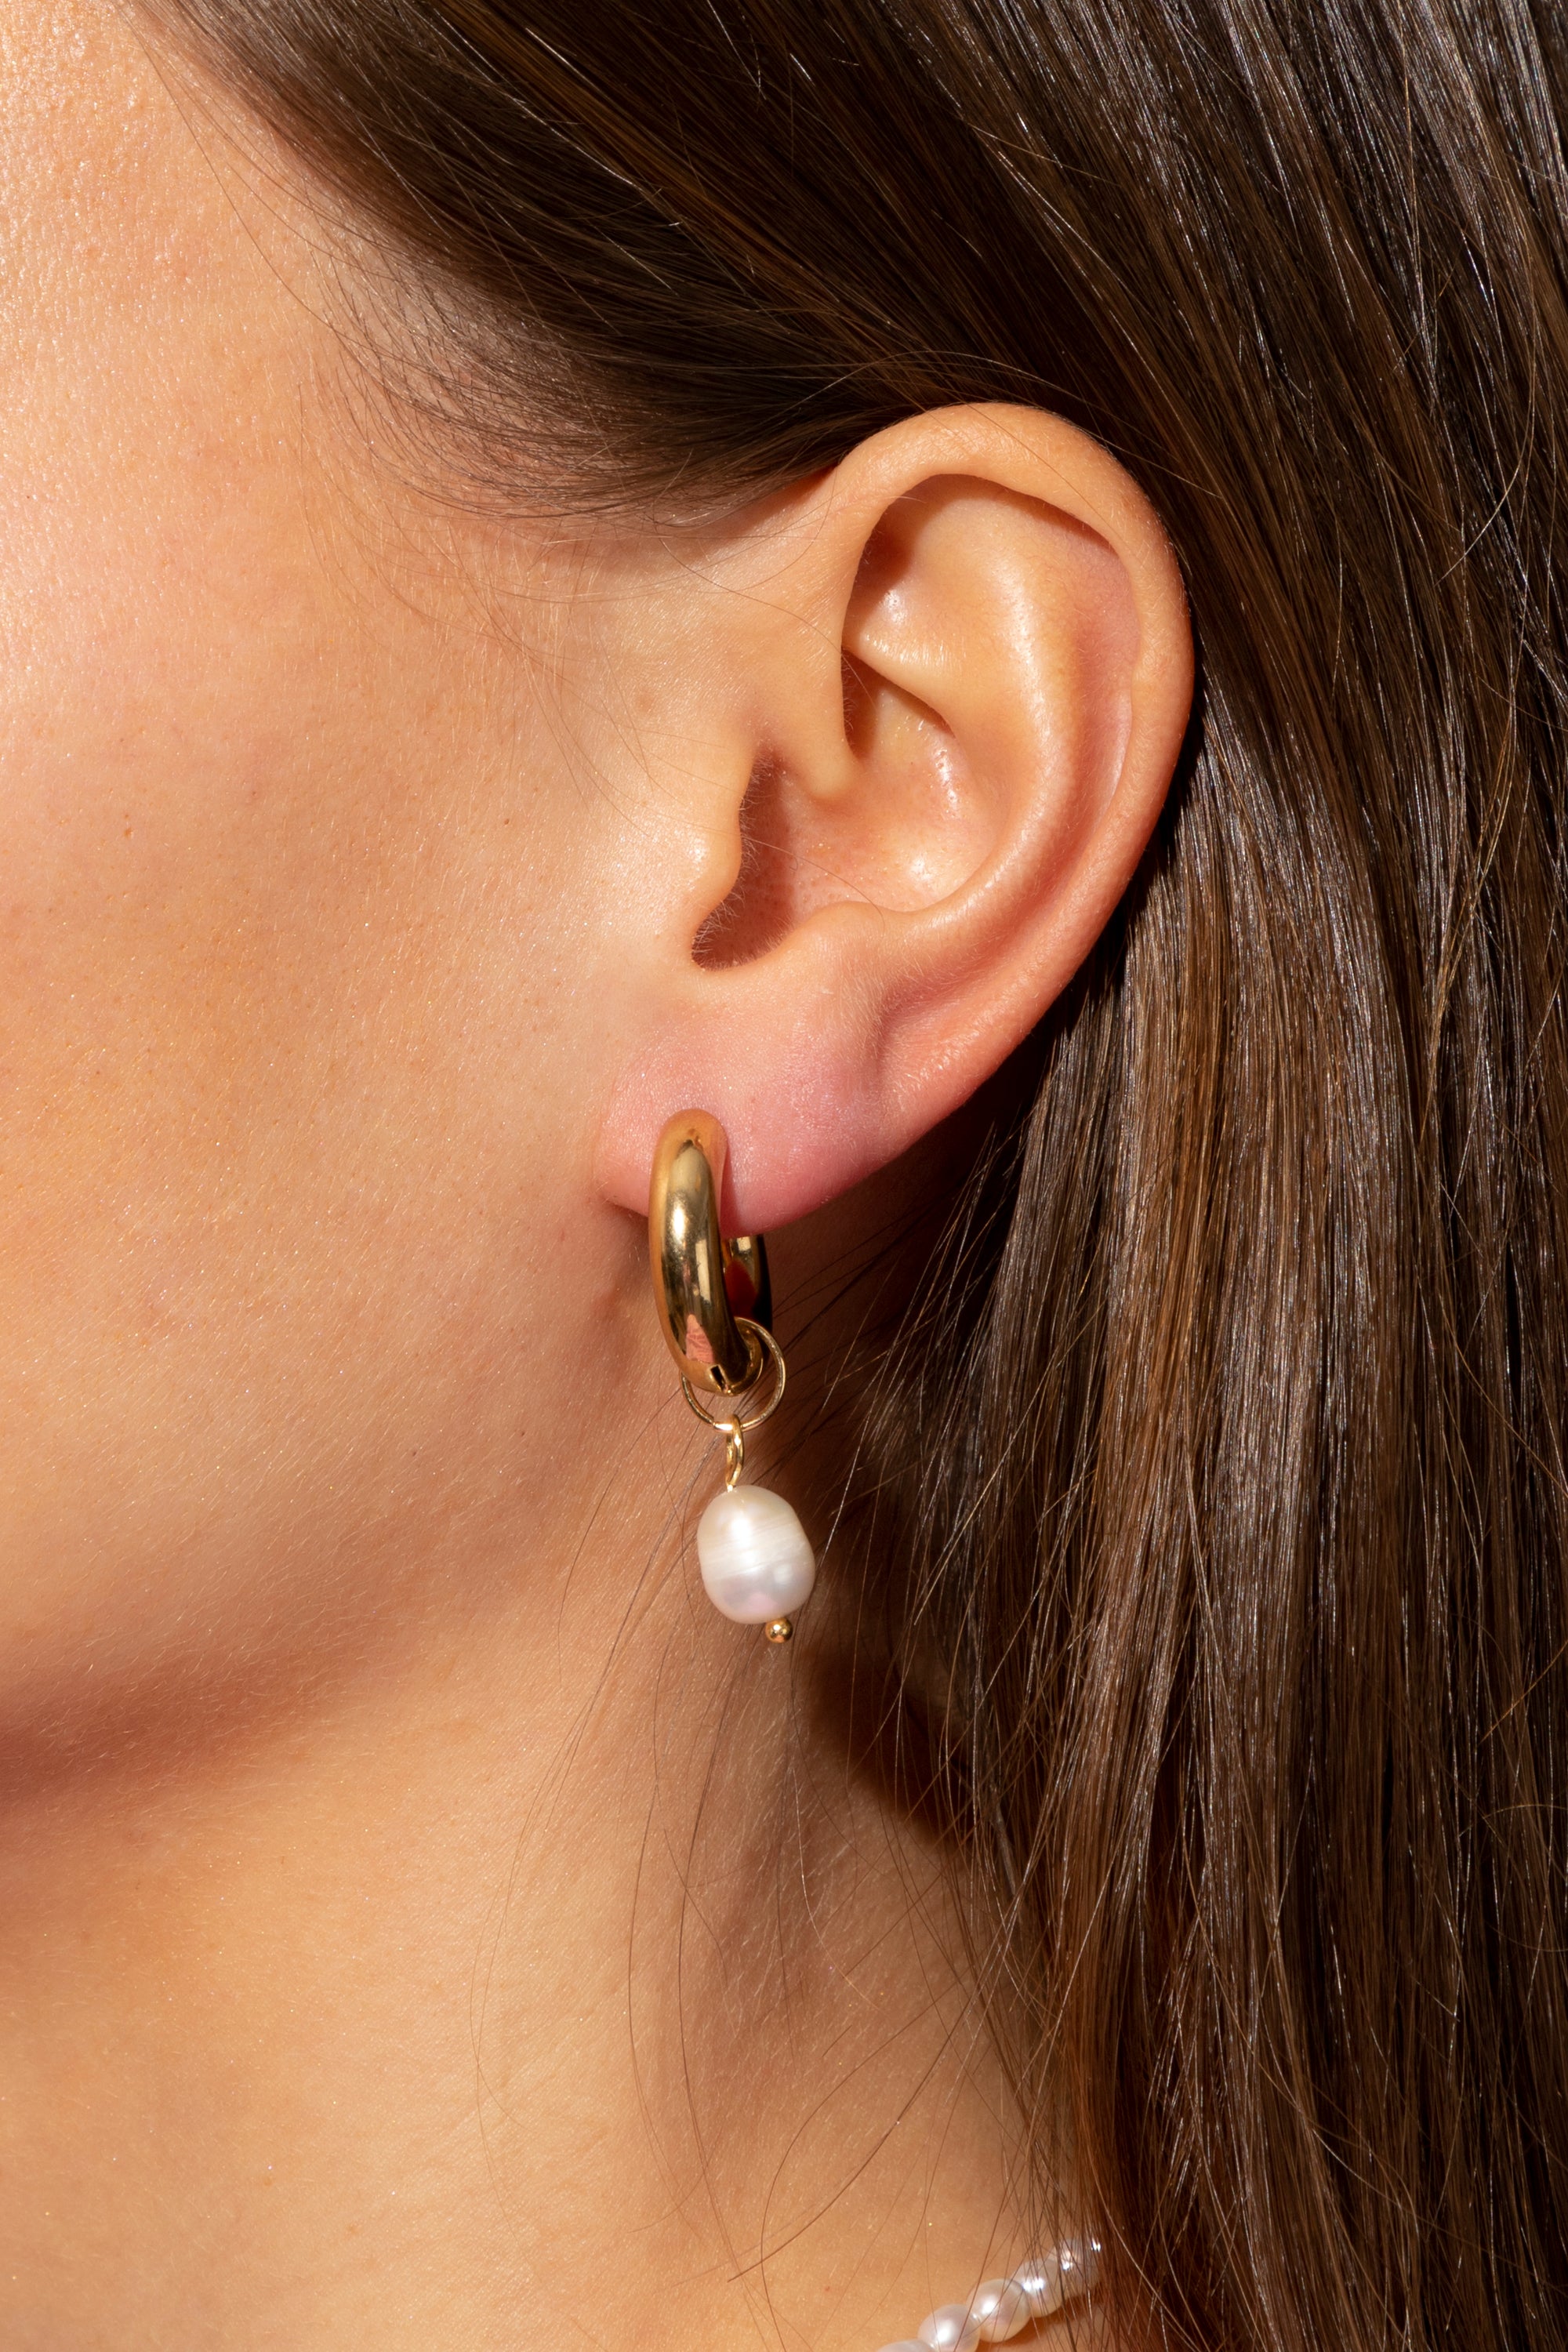 Men's Women's Stainless Steel funky Zip Stud Earrings Set 2pcs Silver Color  (Pair Of) : Amazon.in: Fashion